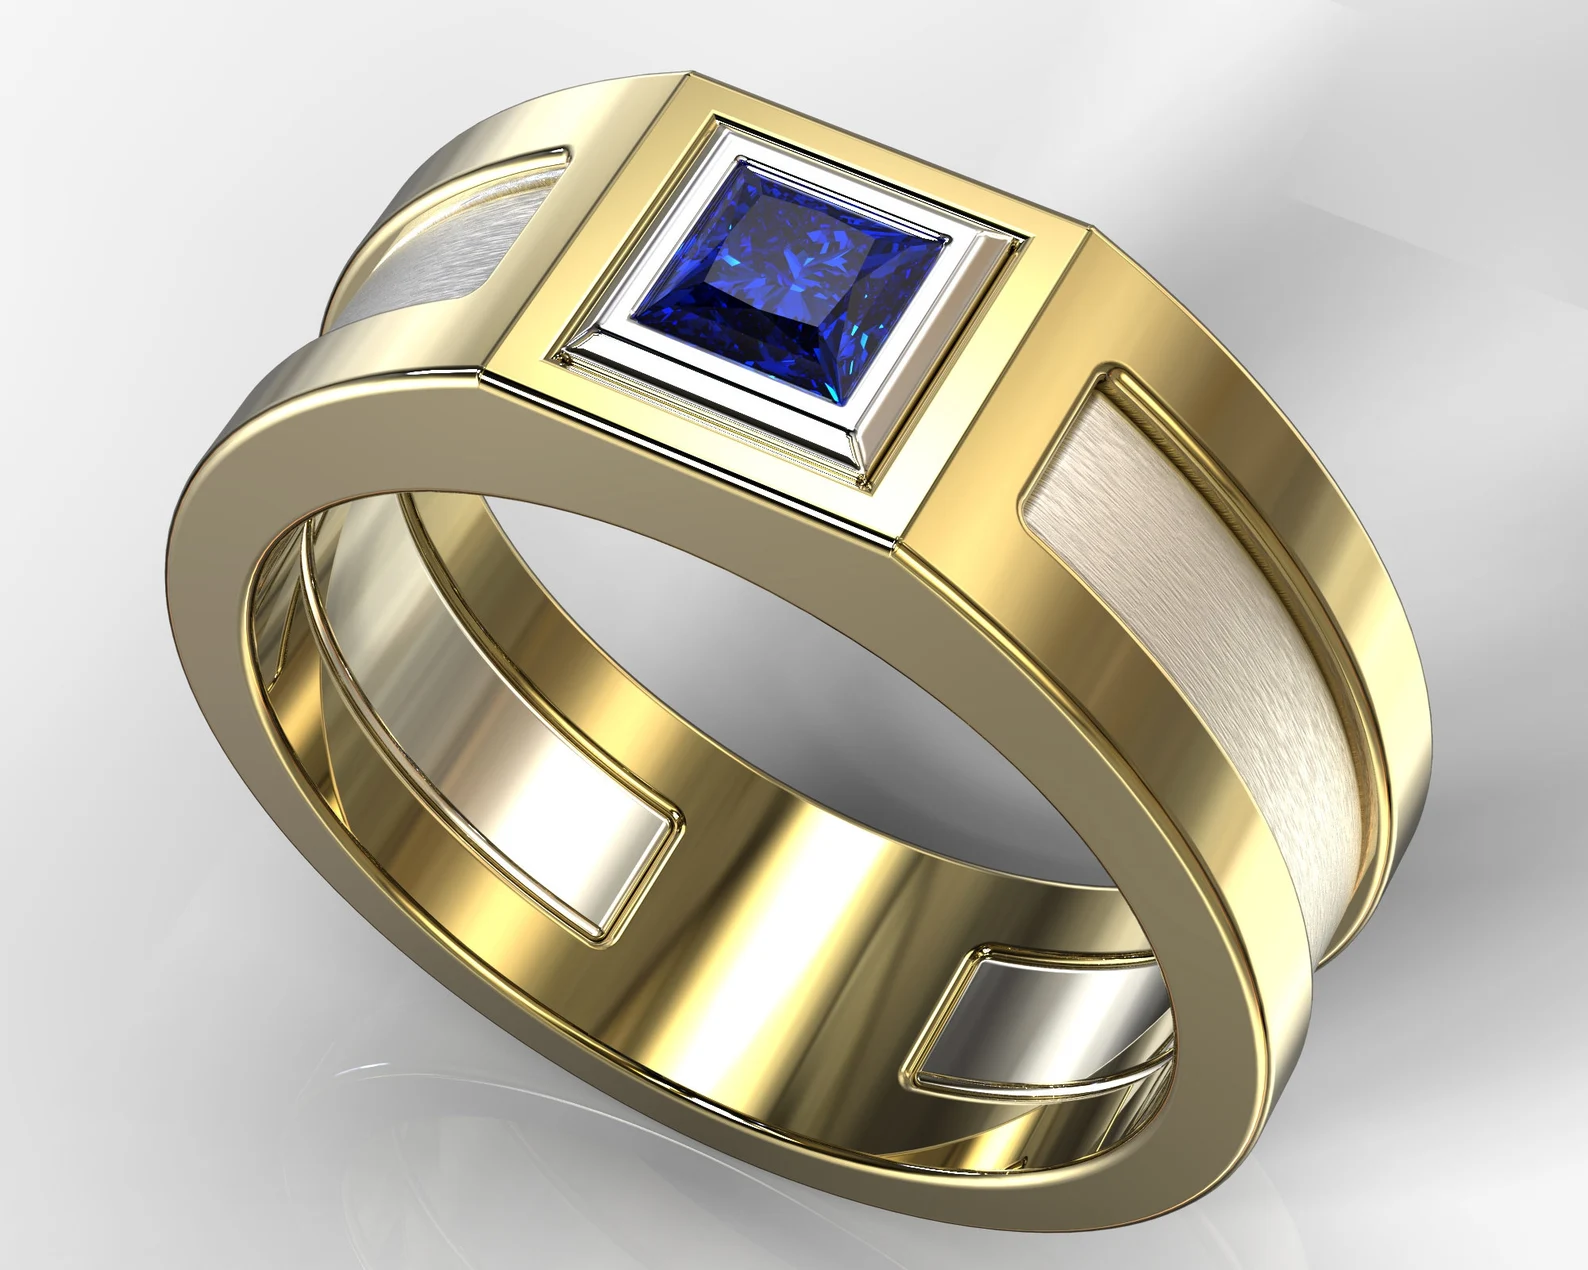 Degas Ring - Vidar Jewelry - Unique Custom Engagement And Wedding Rings